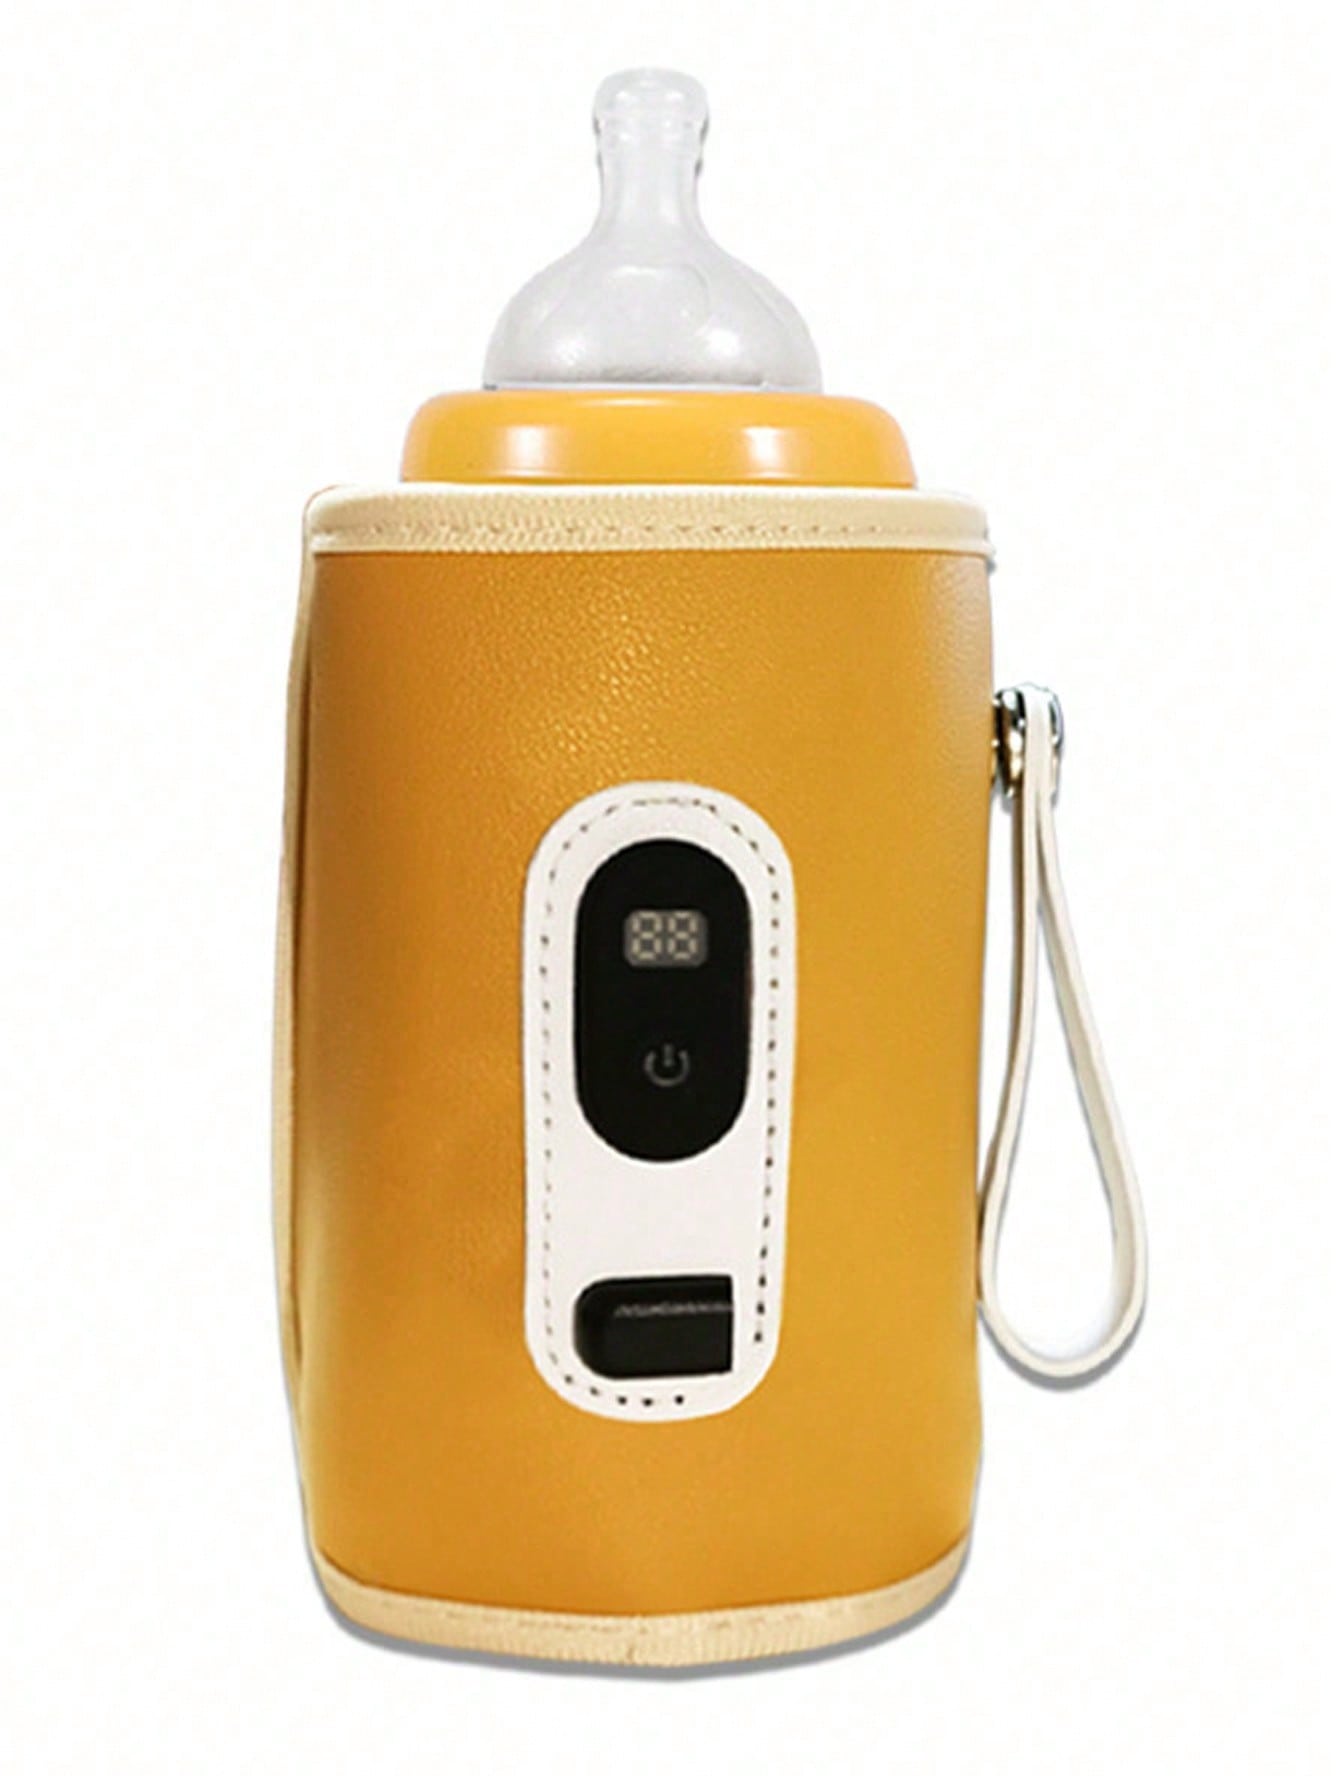 (Power By USB) Portable Bottle Warmer Milk Water Warmer Bottle Heater Drink Warm Milk Thermostat Bag-Yellow-1